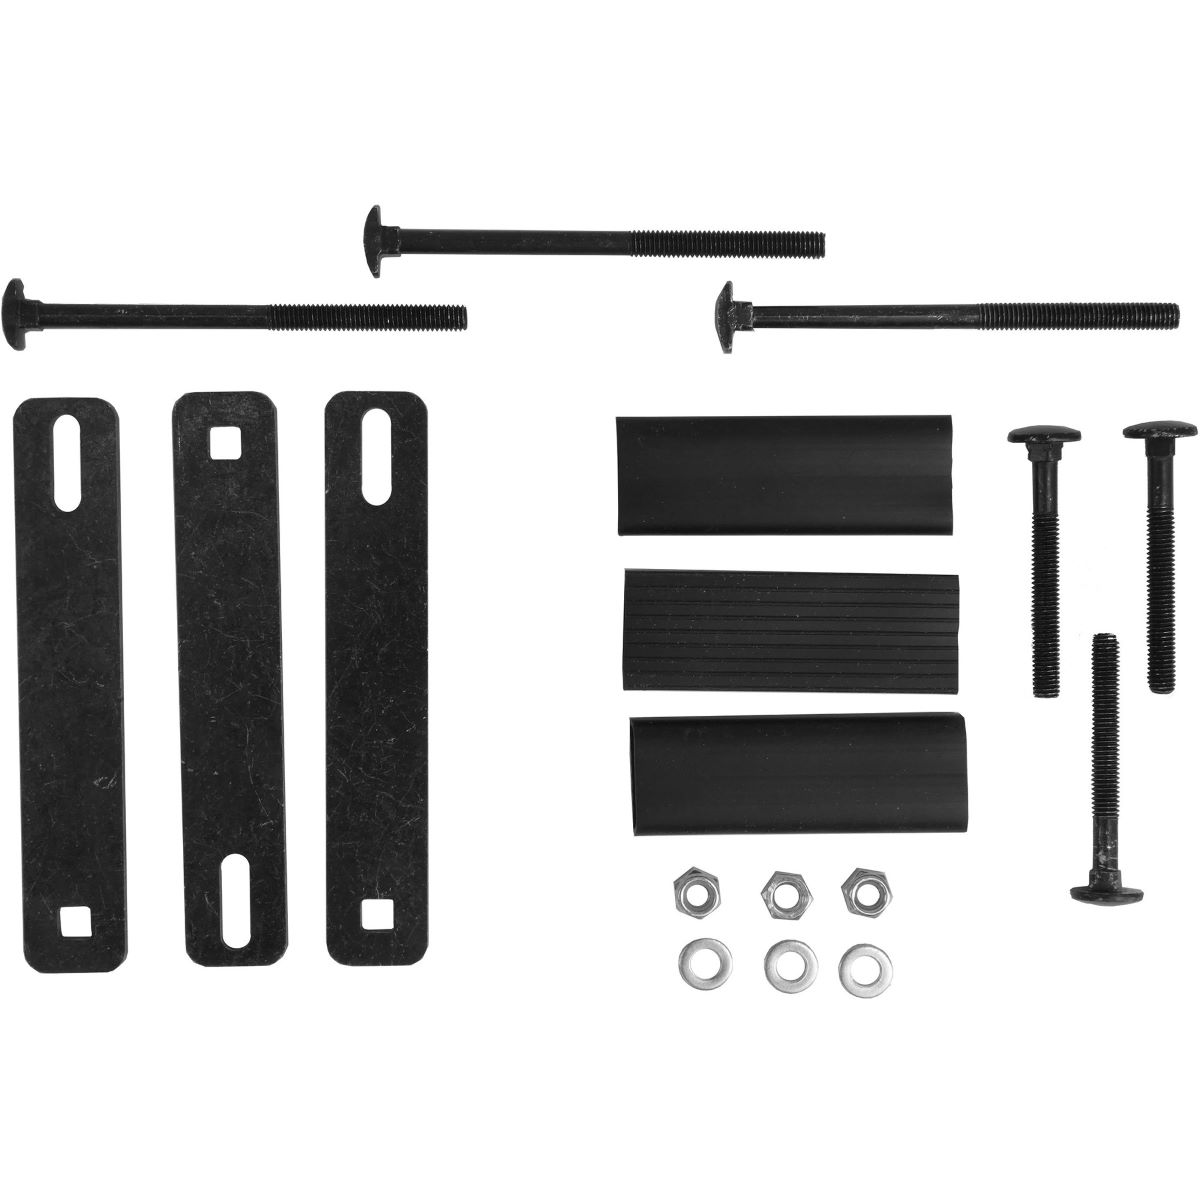 Kit de fijación de barras cuadradas Peruzzo (ART.875) - Portabicicletas de bola